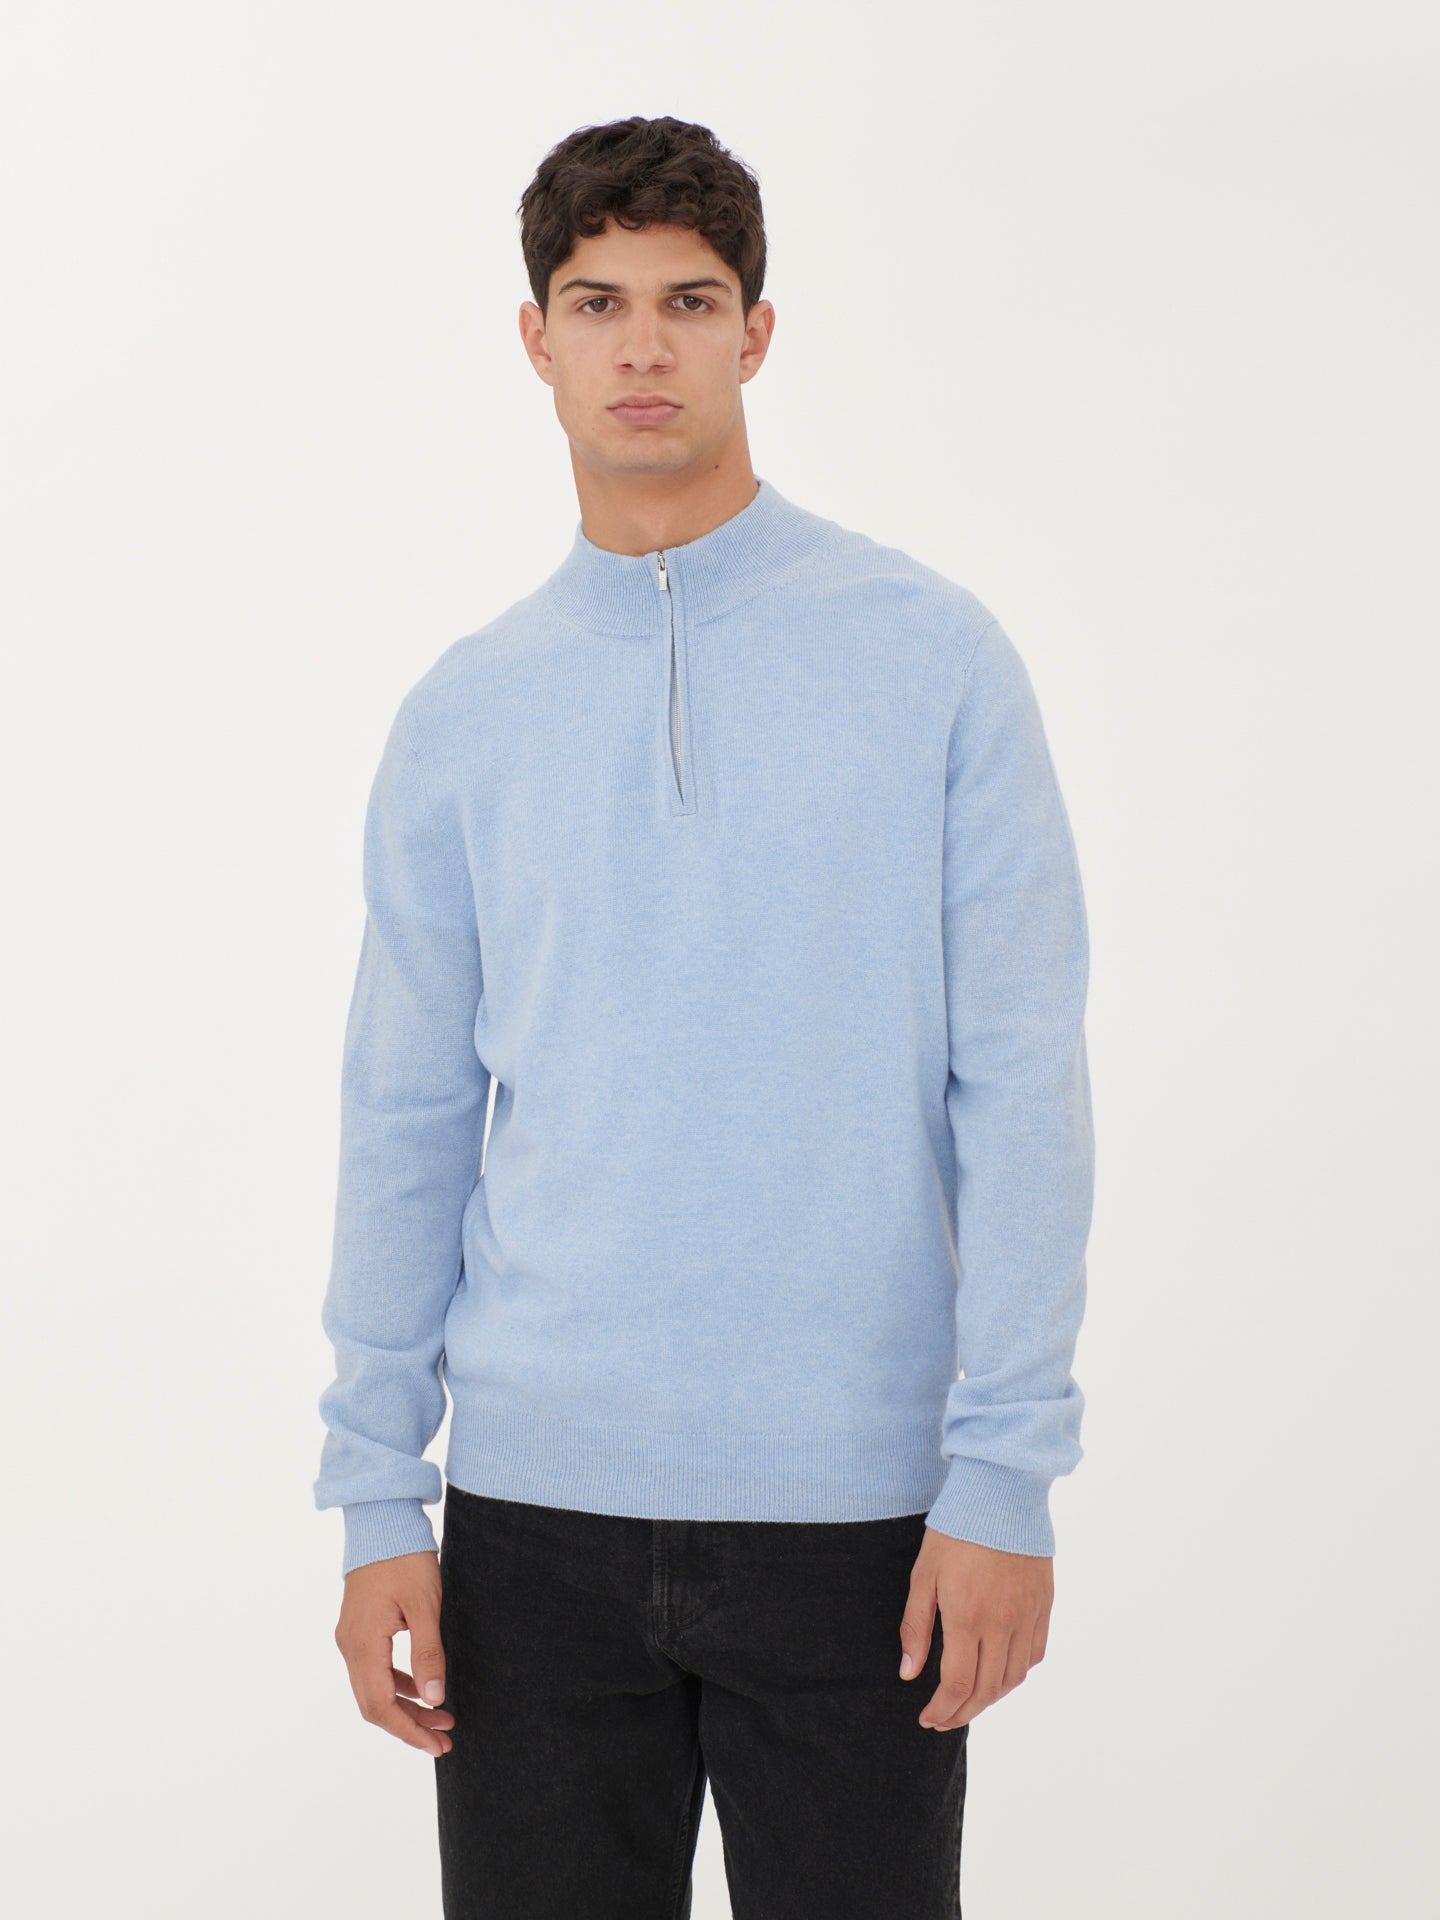 Men's Cashmere Half-Zip Sweater Light Blue - Gobi Cashmere